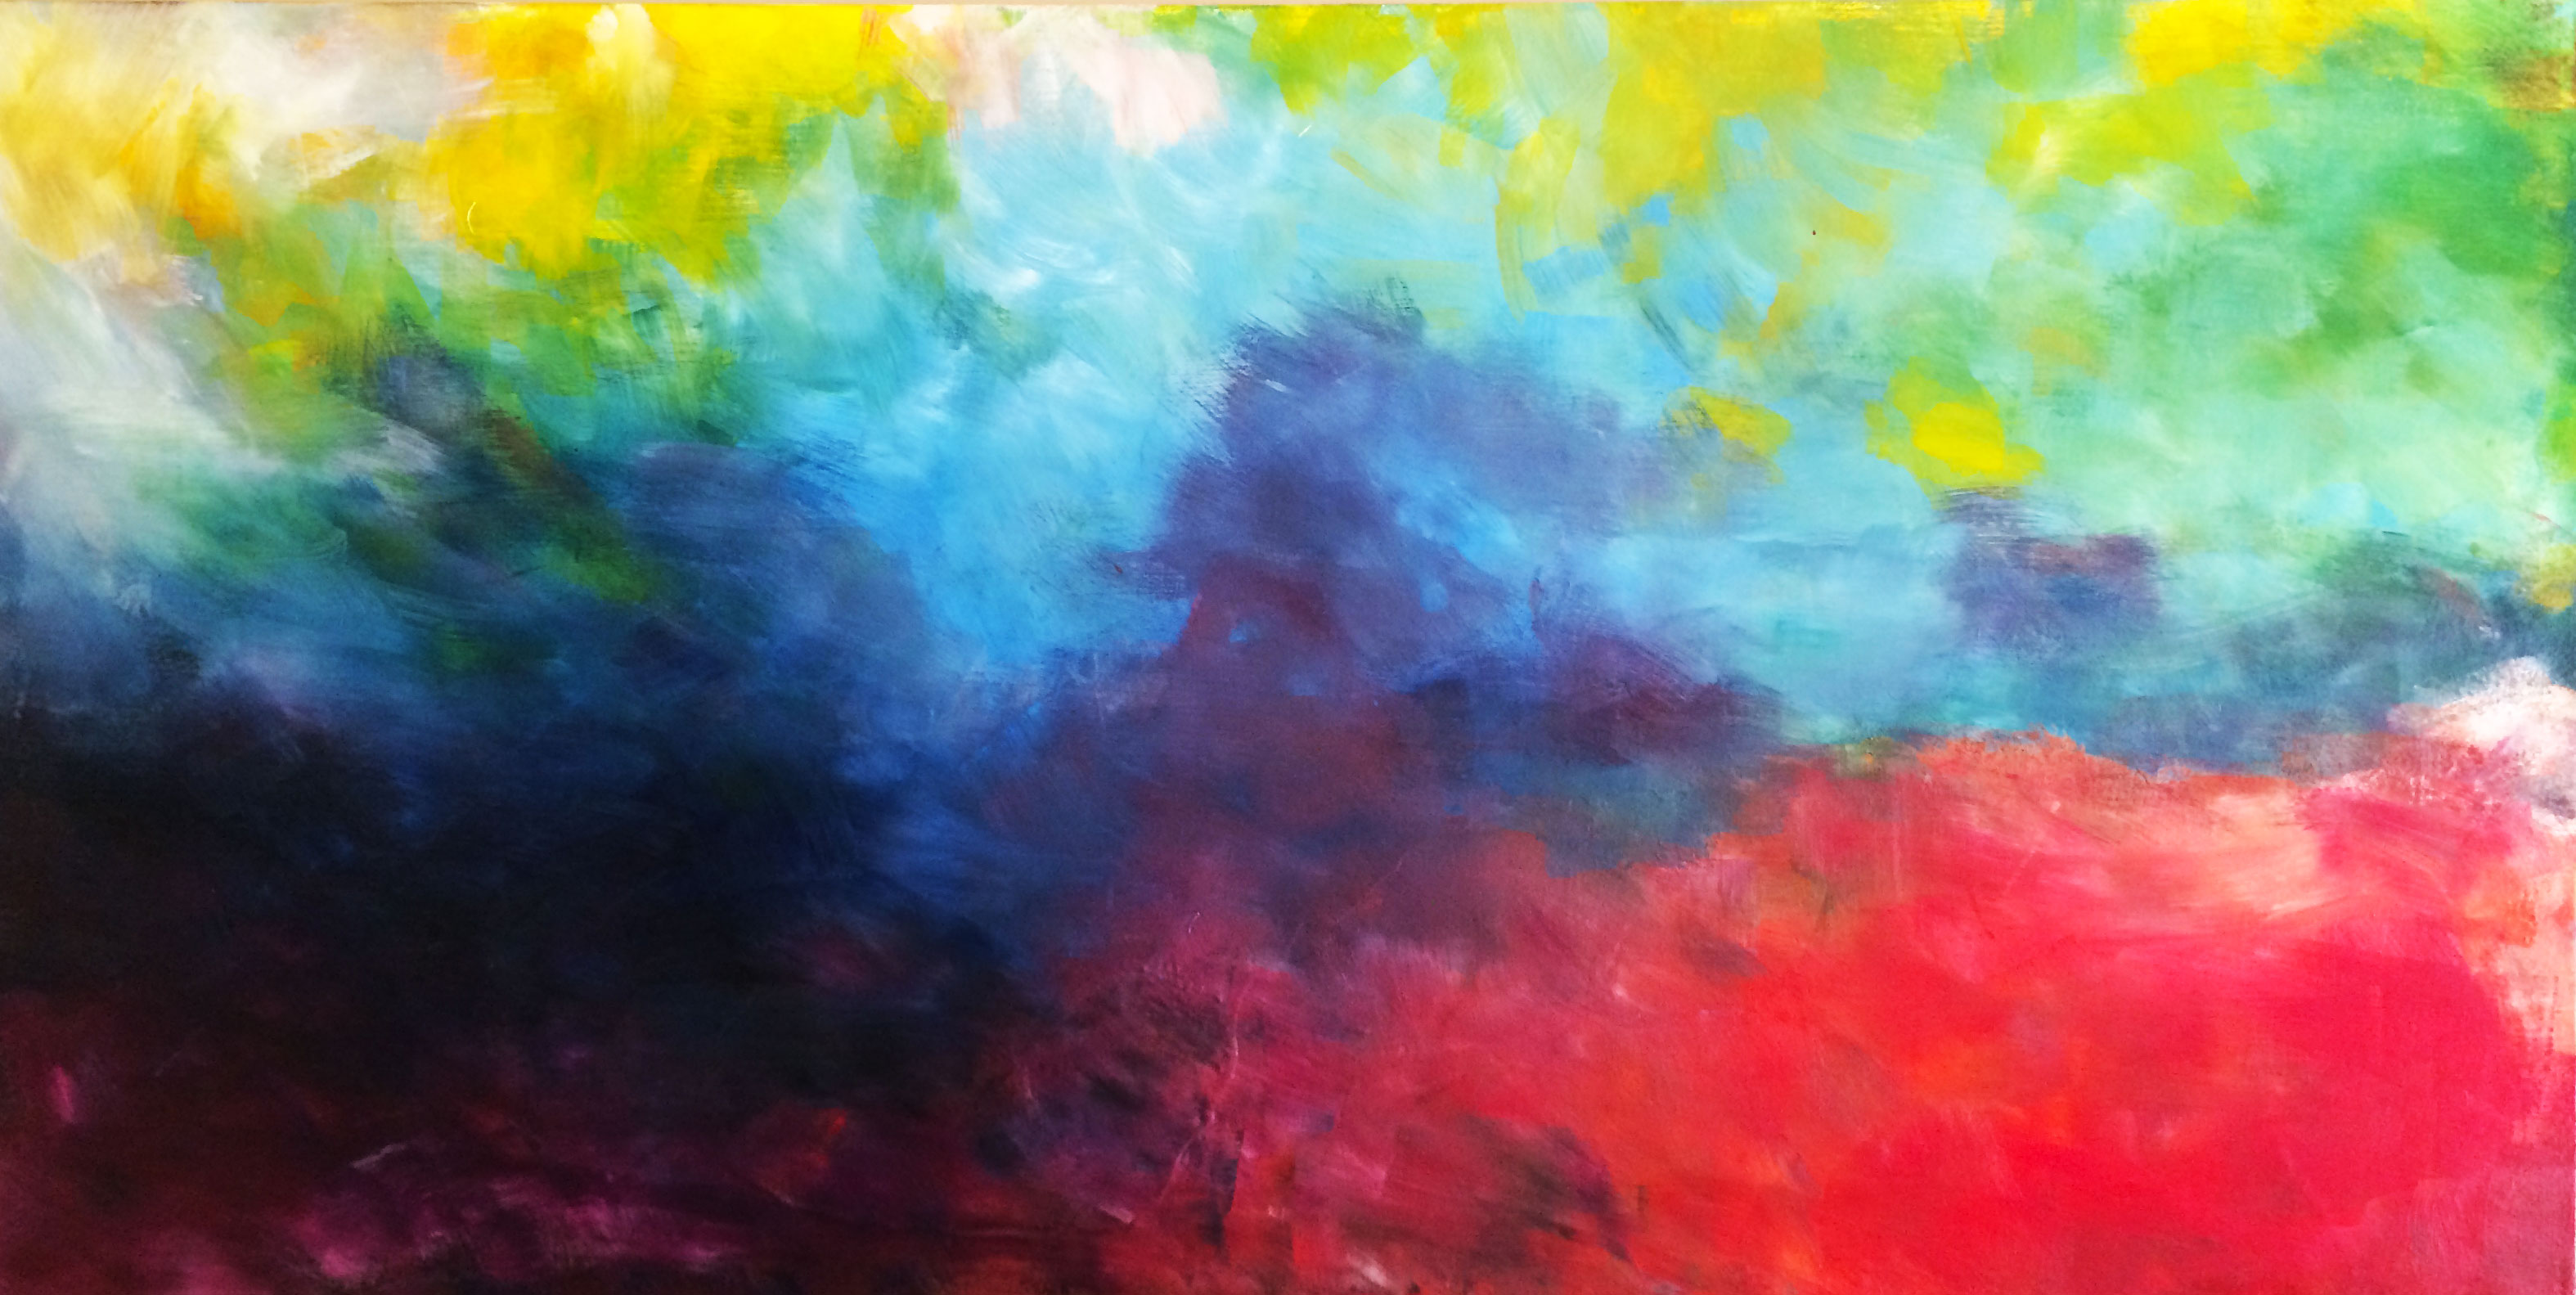 Abstract Art Background 8246 - HDWPro